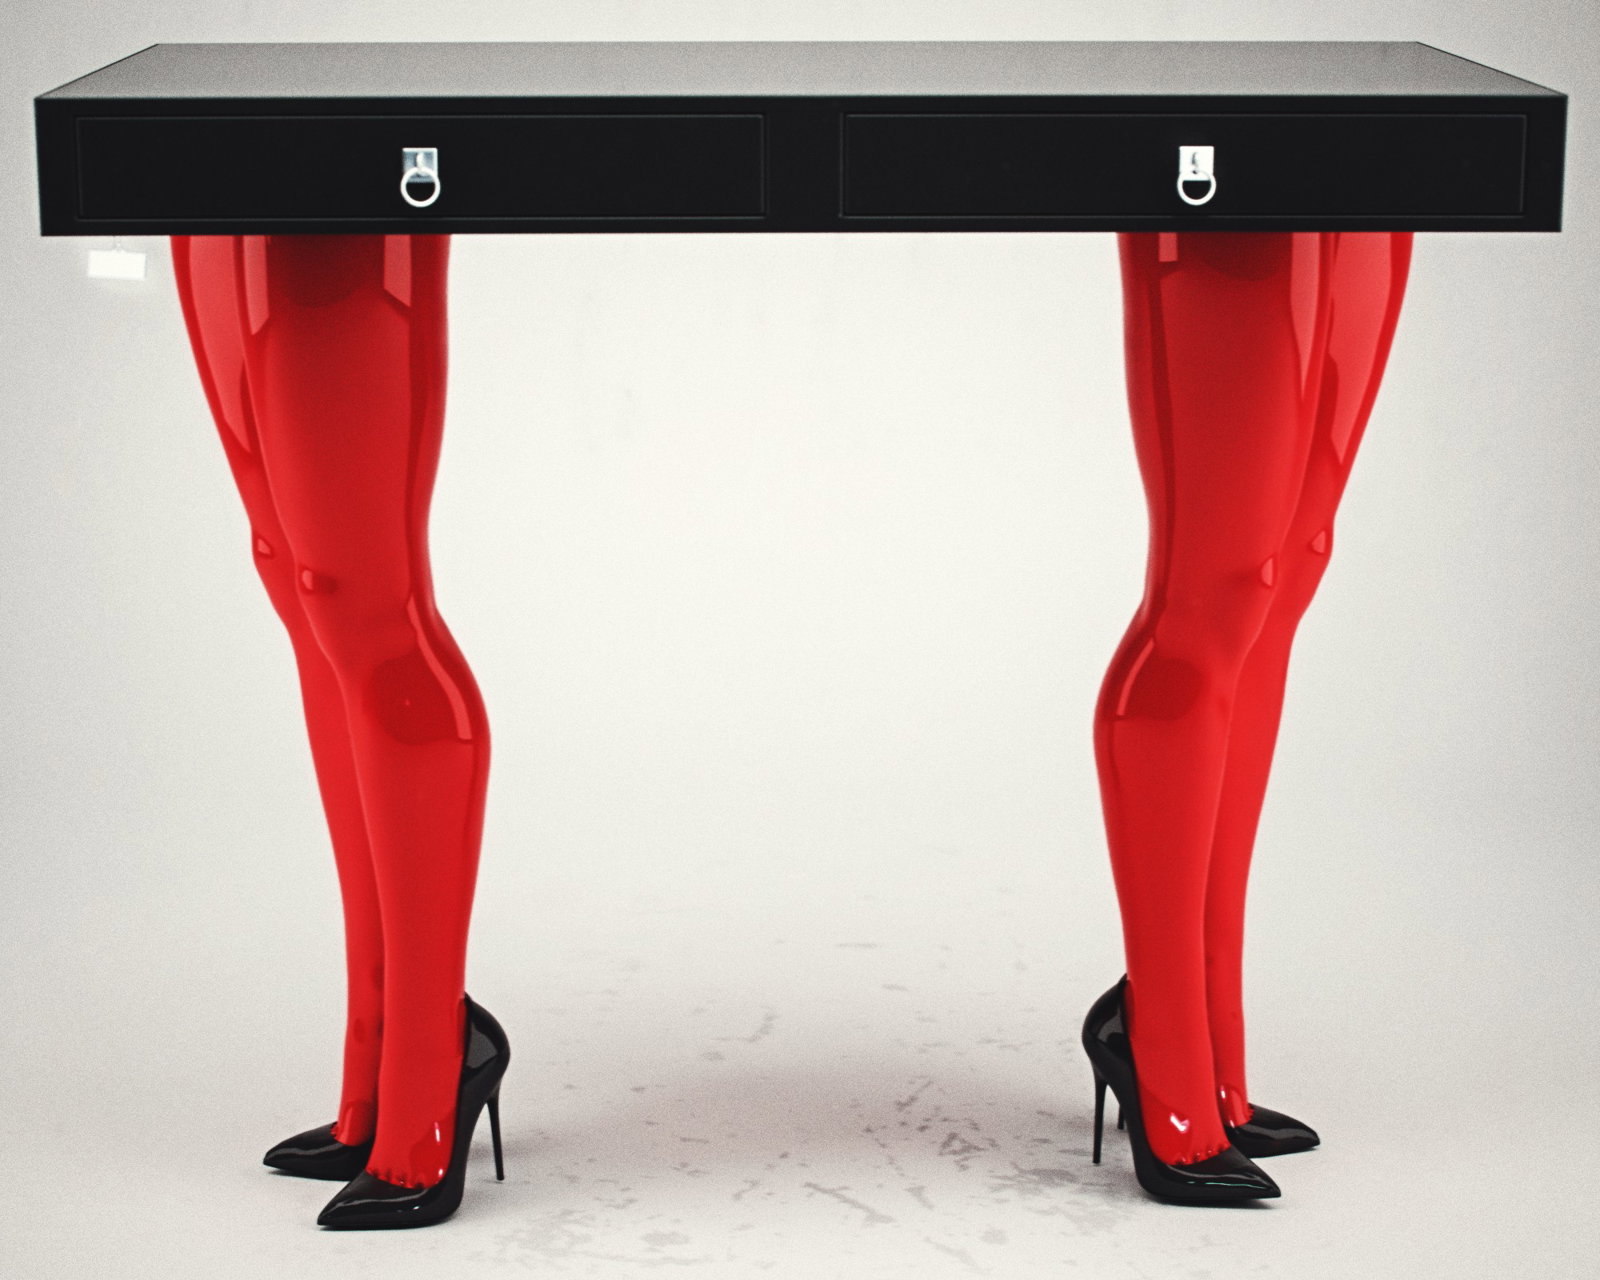 Photo by Kvint Kallas with the username @kvintkallas,  January 25, 2020 at 5:16 PM. The post is about the topic Kvint Kallas Fetish Art and the text says '#fetish #footfetish #legs #table #fetishart #furniture #highheels #kvintkallas #femdom'